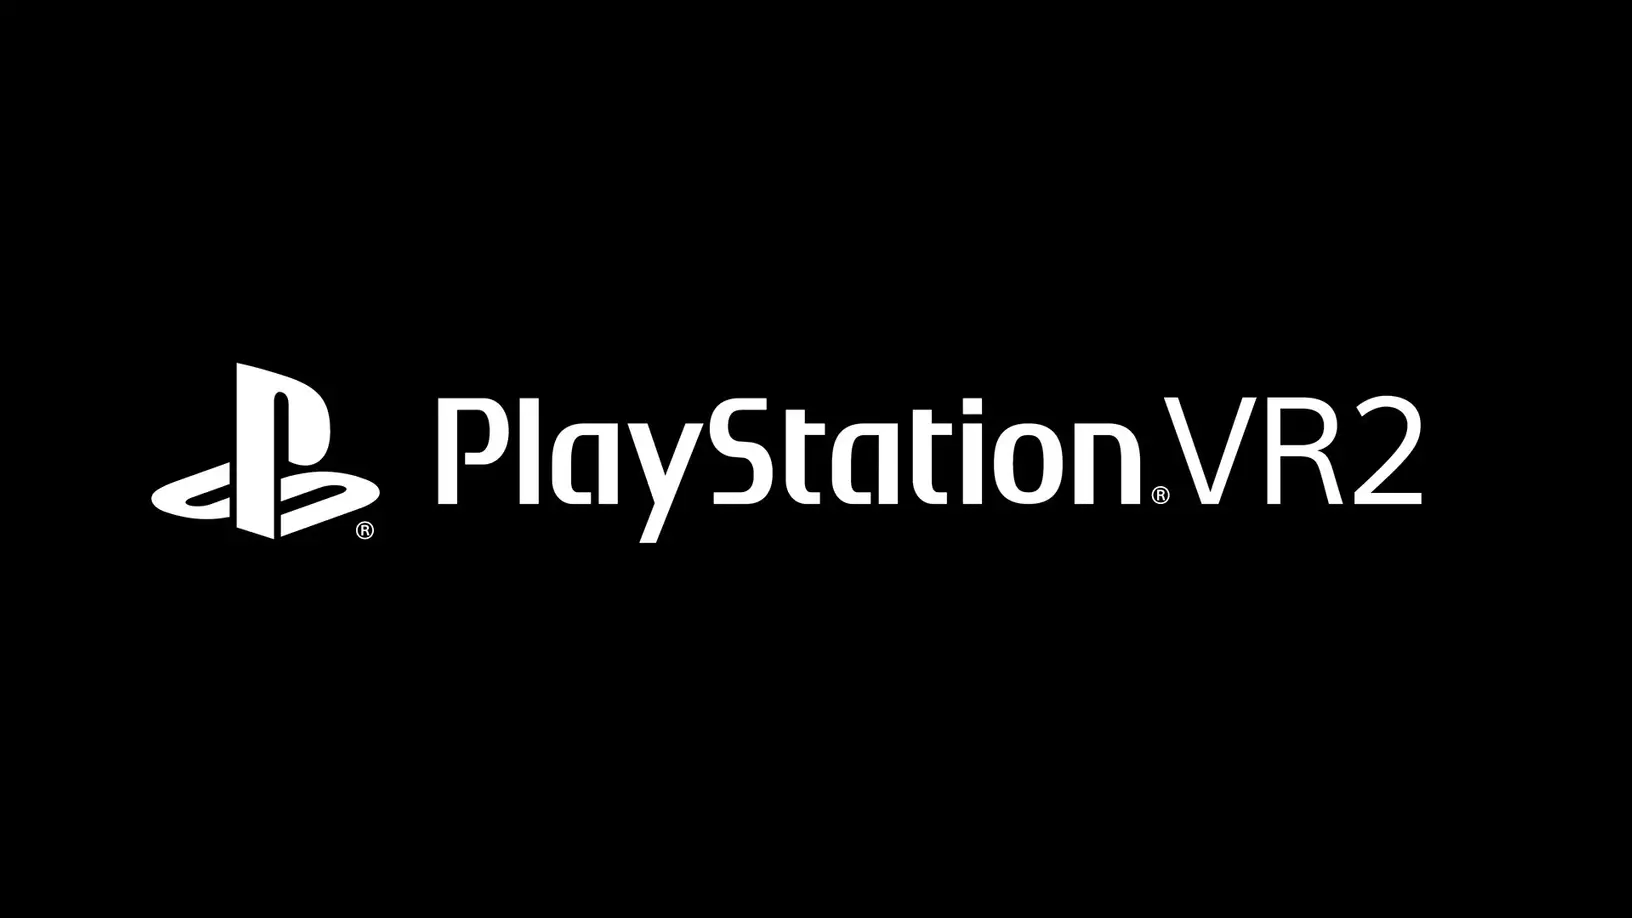 A Sony bejelentette a PlayStation VR2-t, vele együtt pedig megtudtuk annak specifikációit is